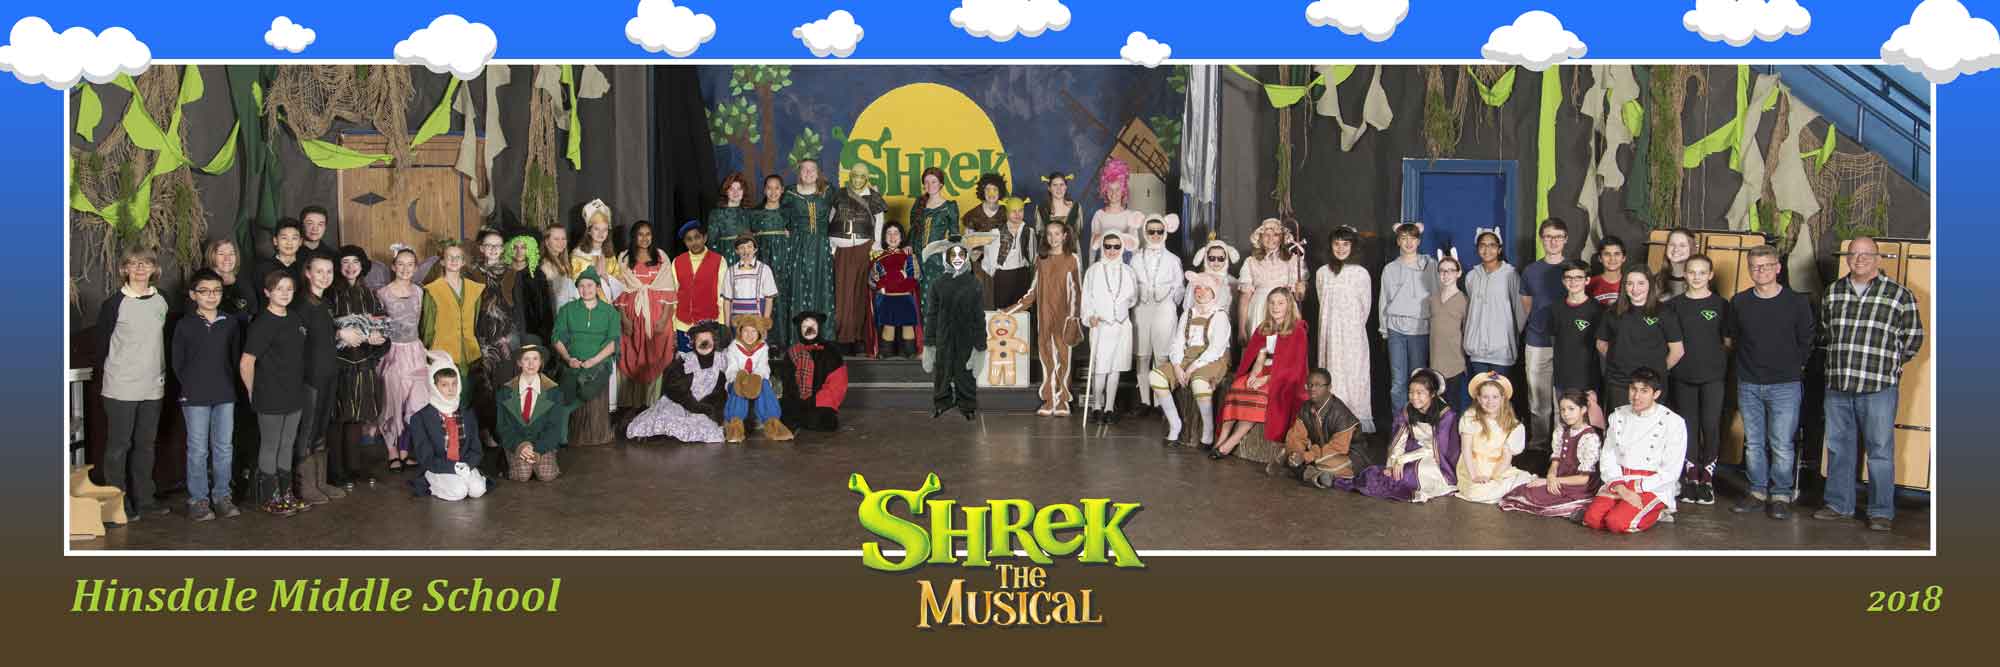 Hinsdale Shrek Theater Group Photo by Tom Killoran